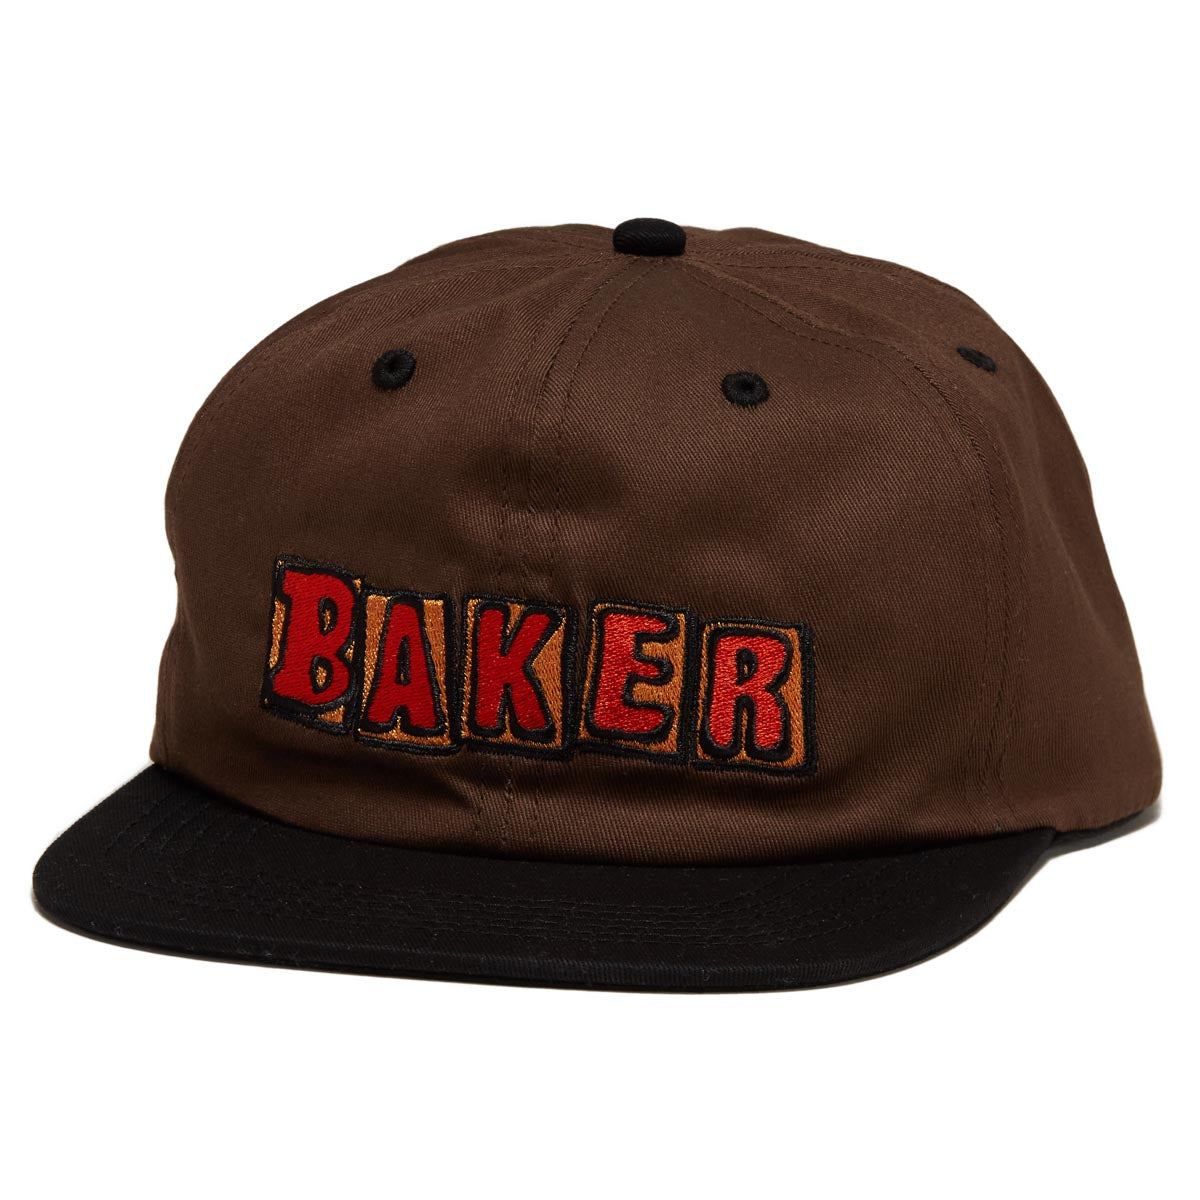 Baker Crumb Hat - Brown/Black image 1